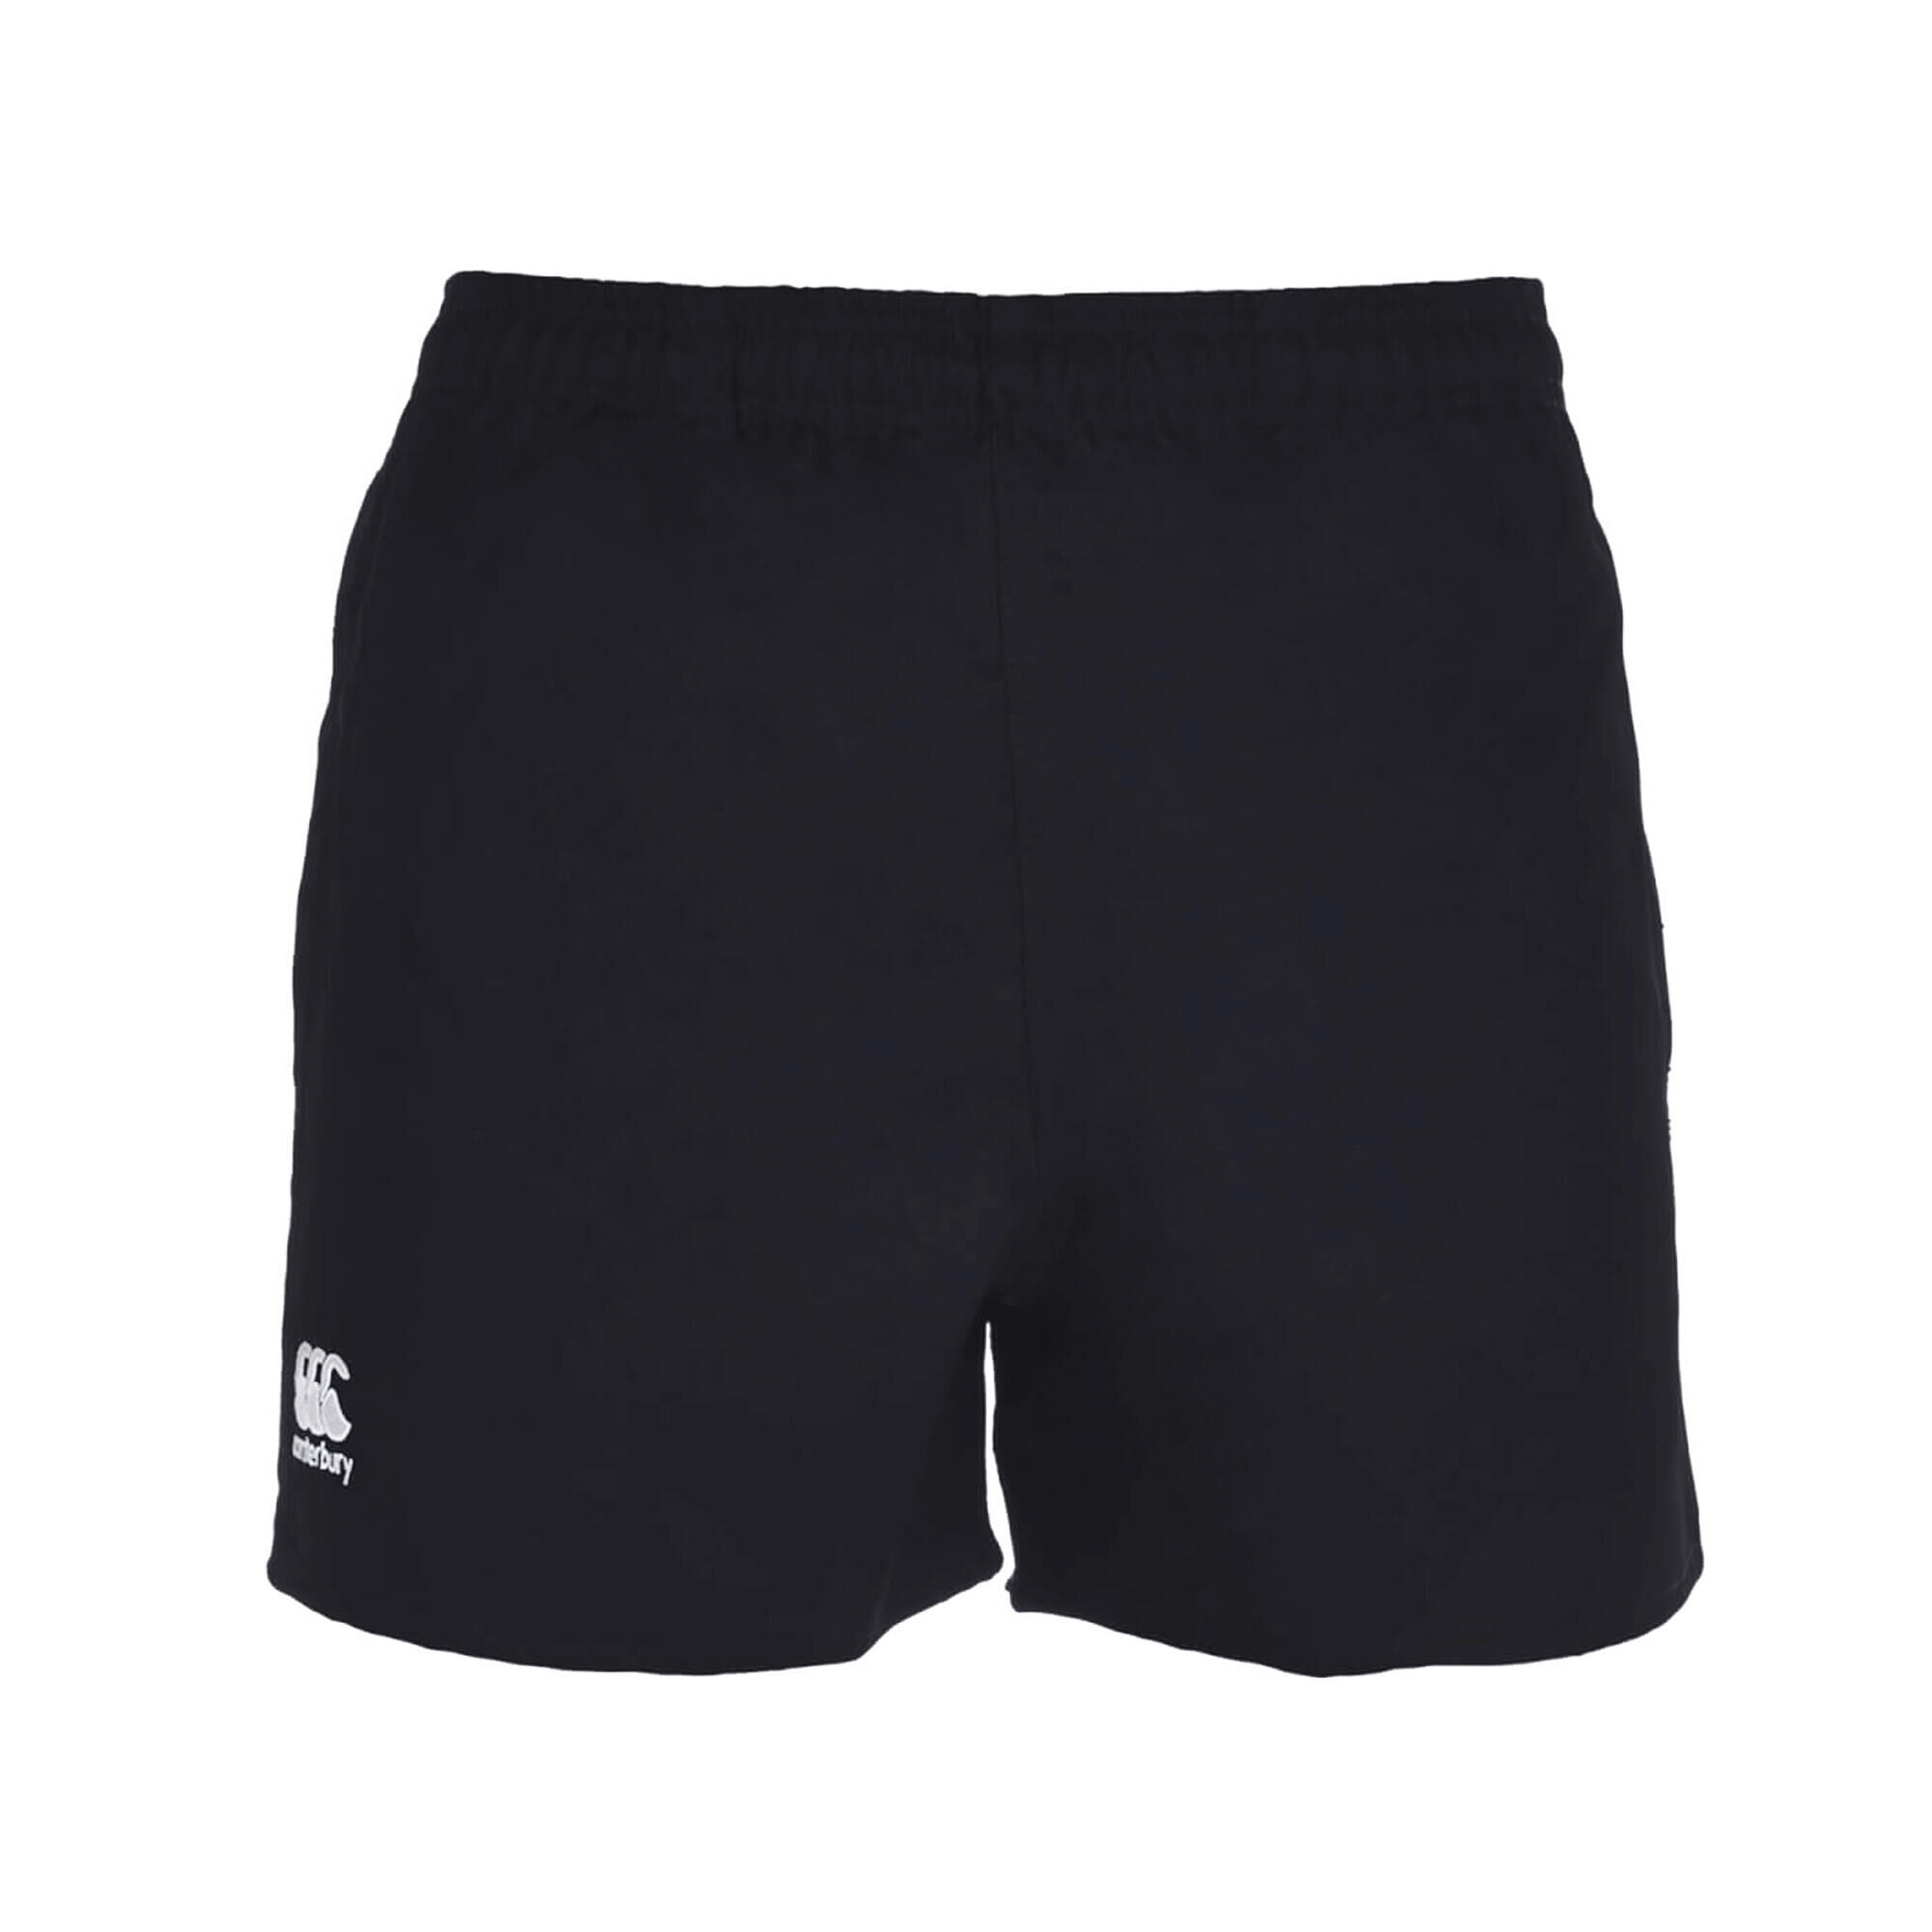 CANTERBURY Mens Professional Polyester Shorts (Black)